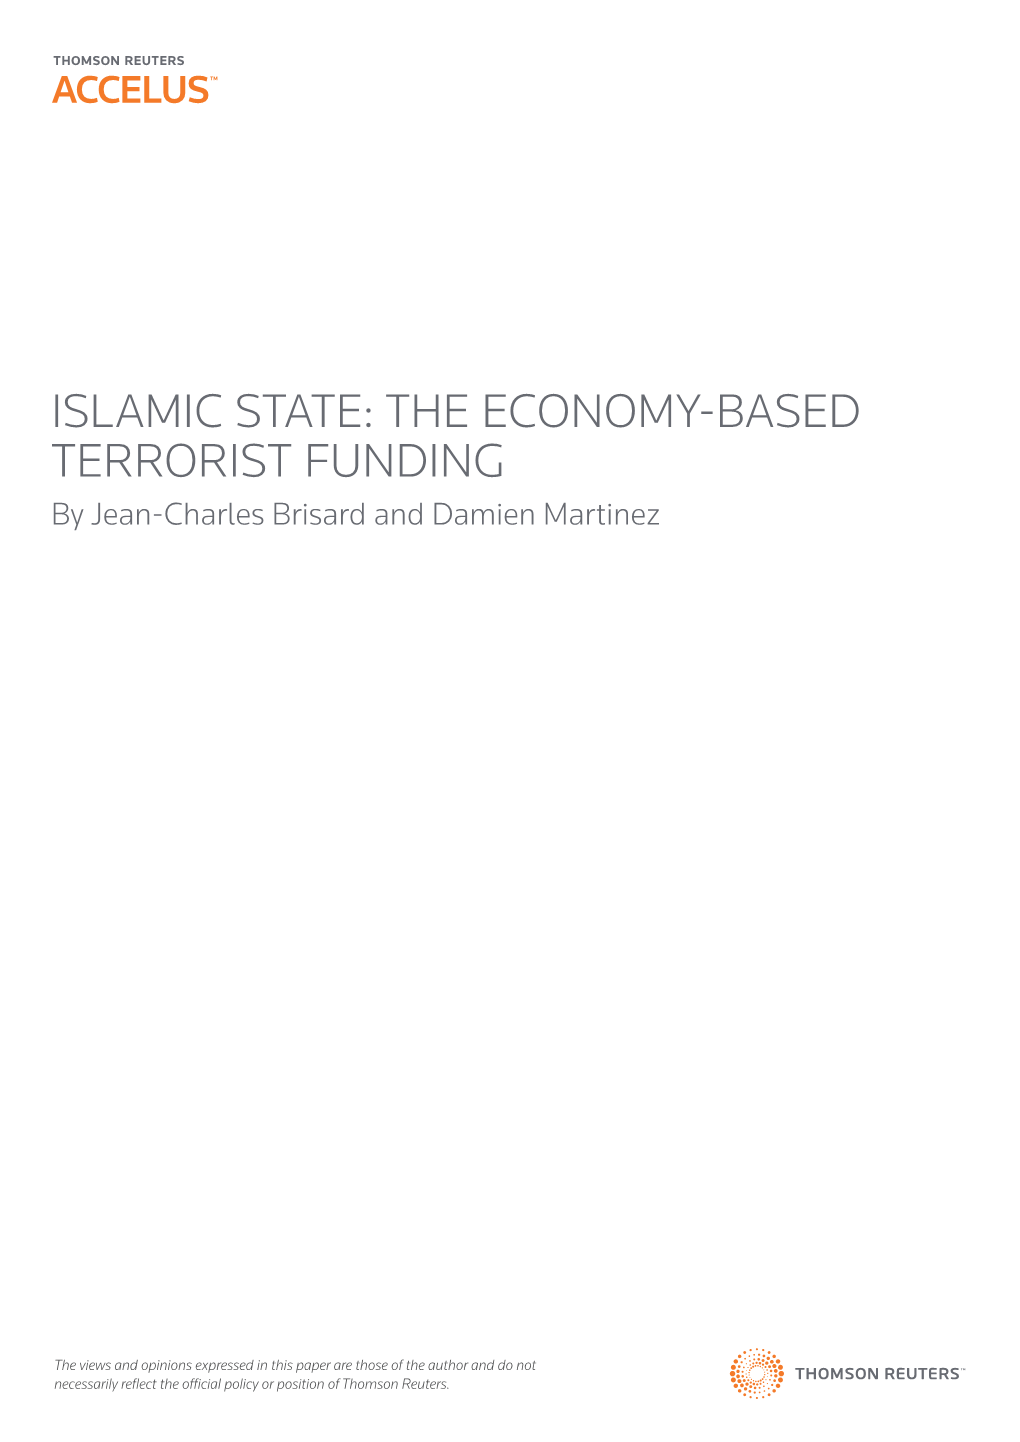 ISLAMIC STATE: the ECONOMY-BASED TERRORIST FUNDING by Jean-Charles Brisard and Damien Martinez